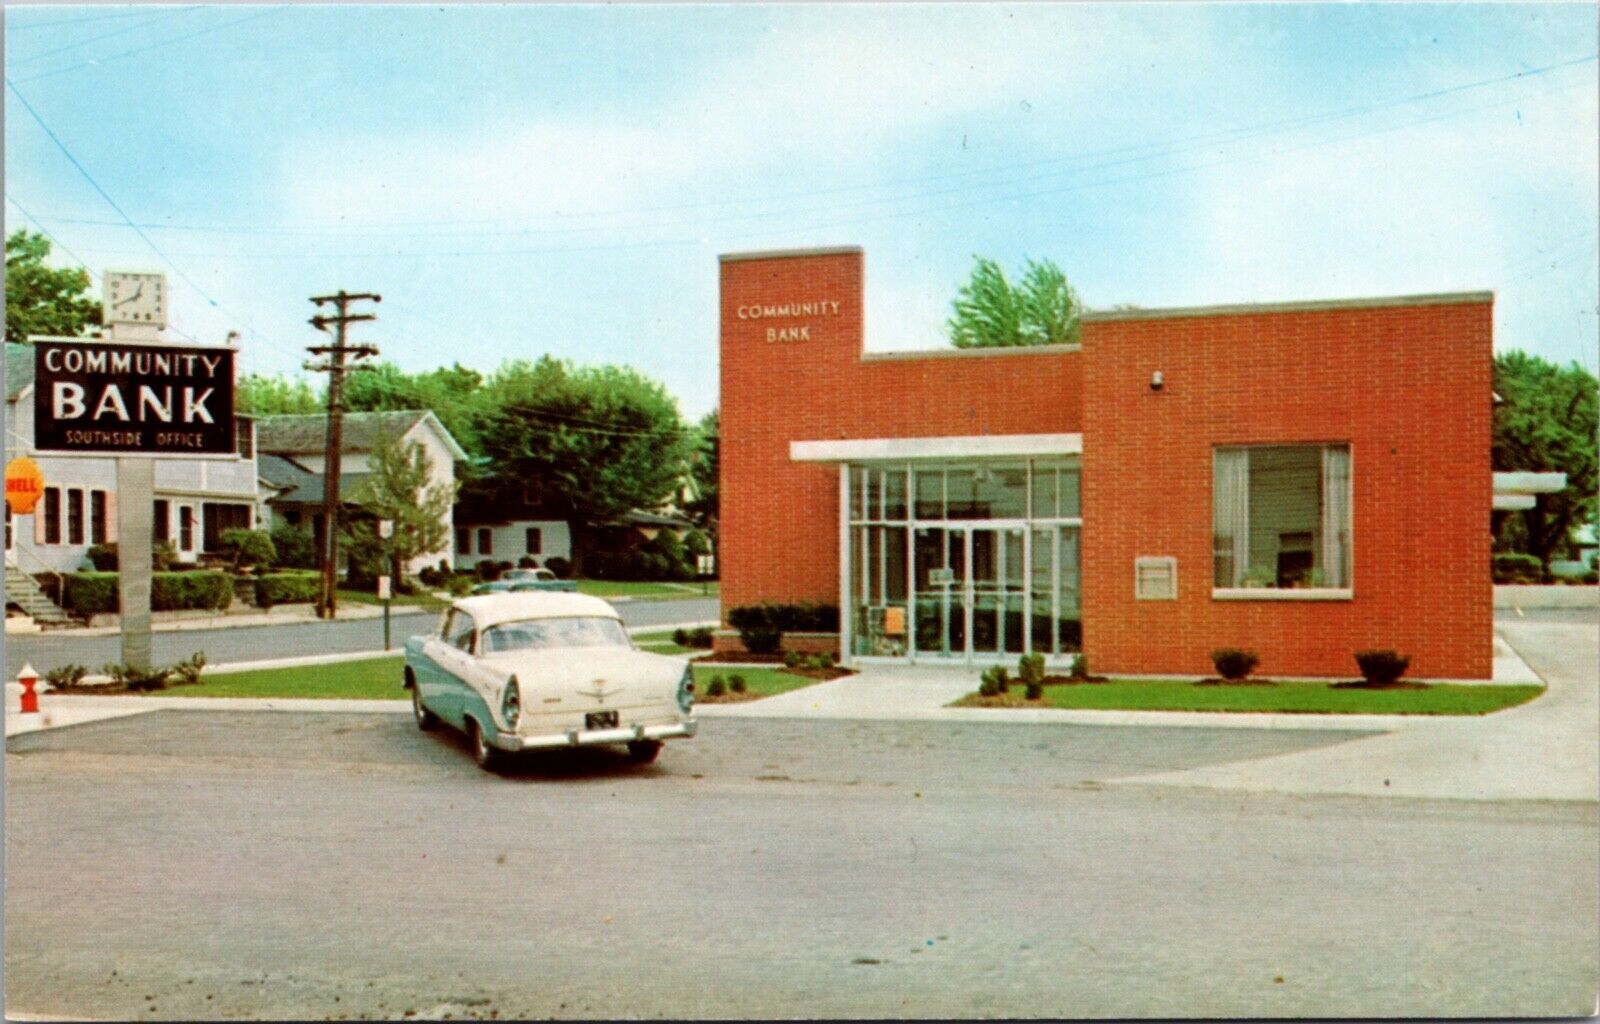 Postcard The Community Bank in Napoleon, Ohio